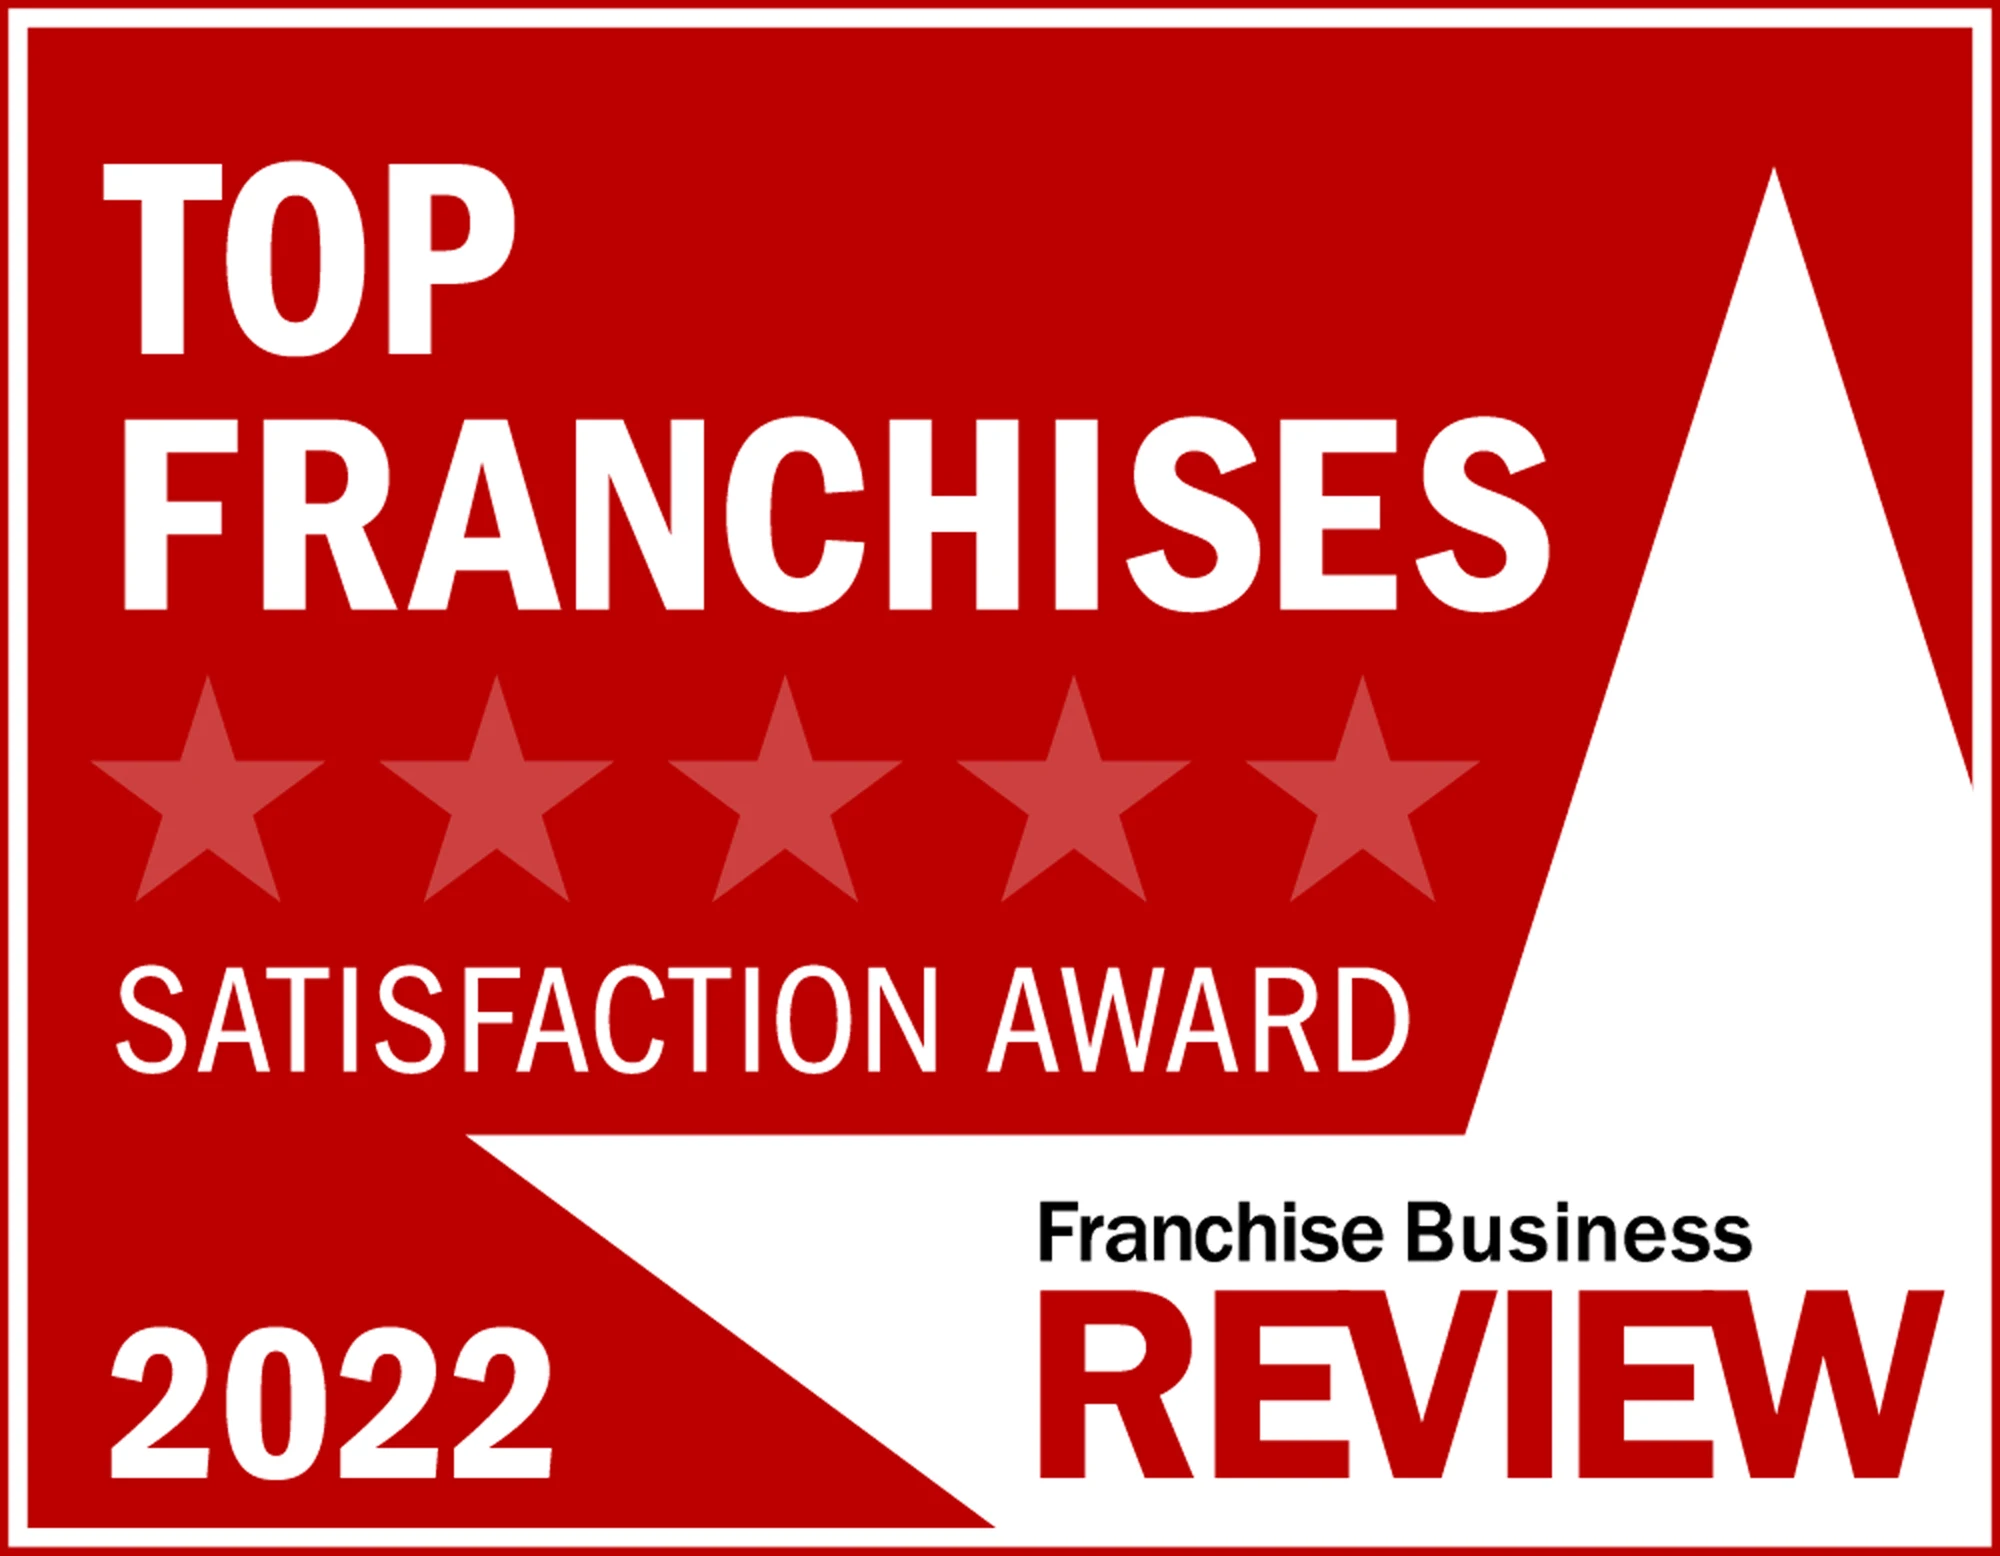 Franchise Business Review Top Franchises  - 2022